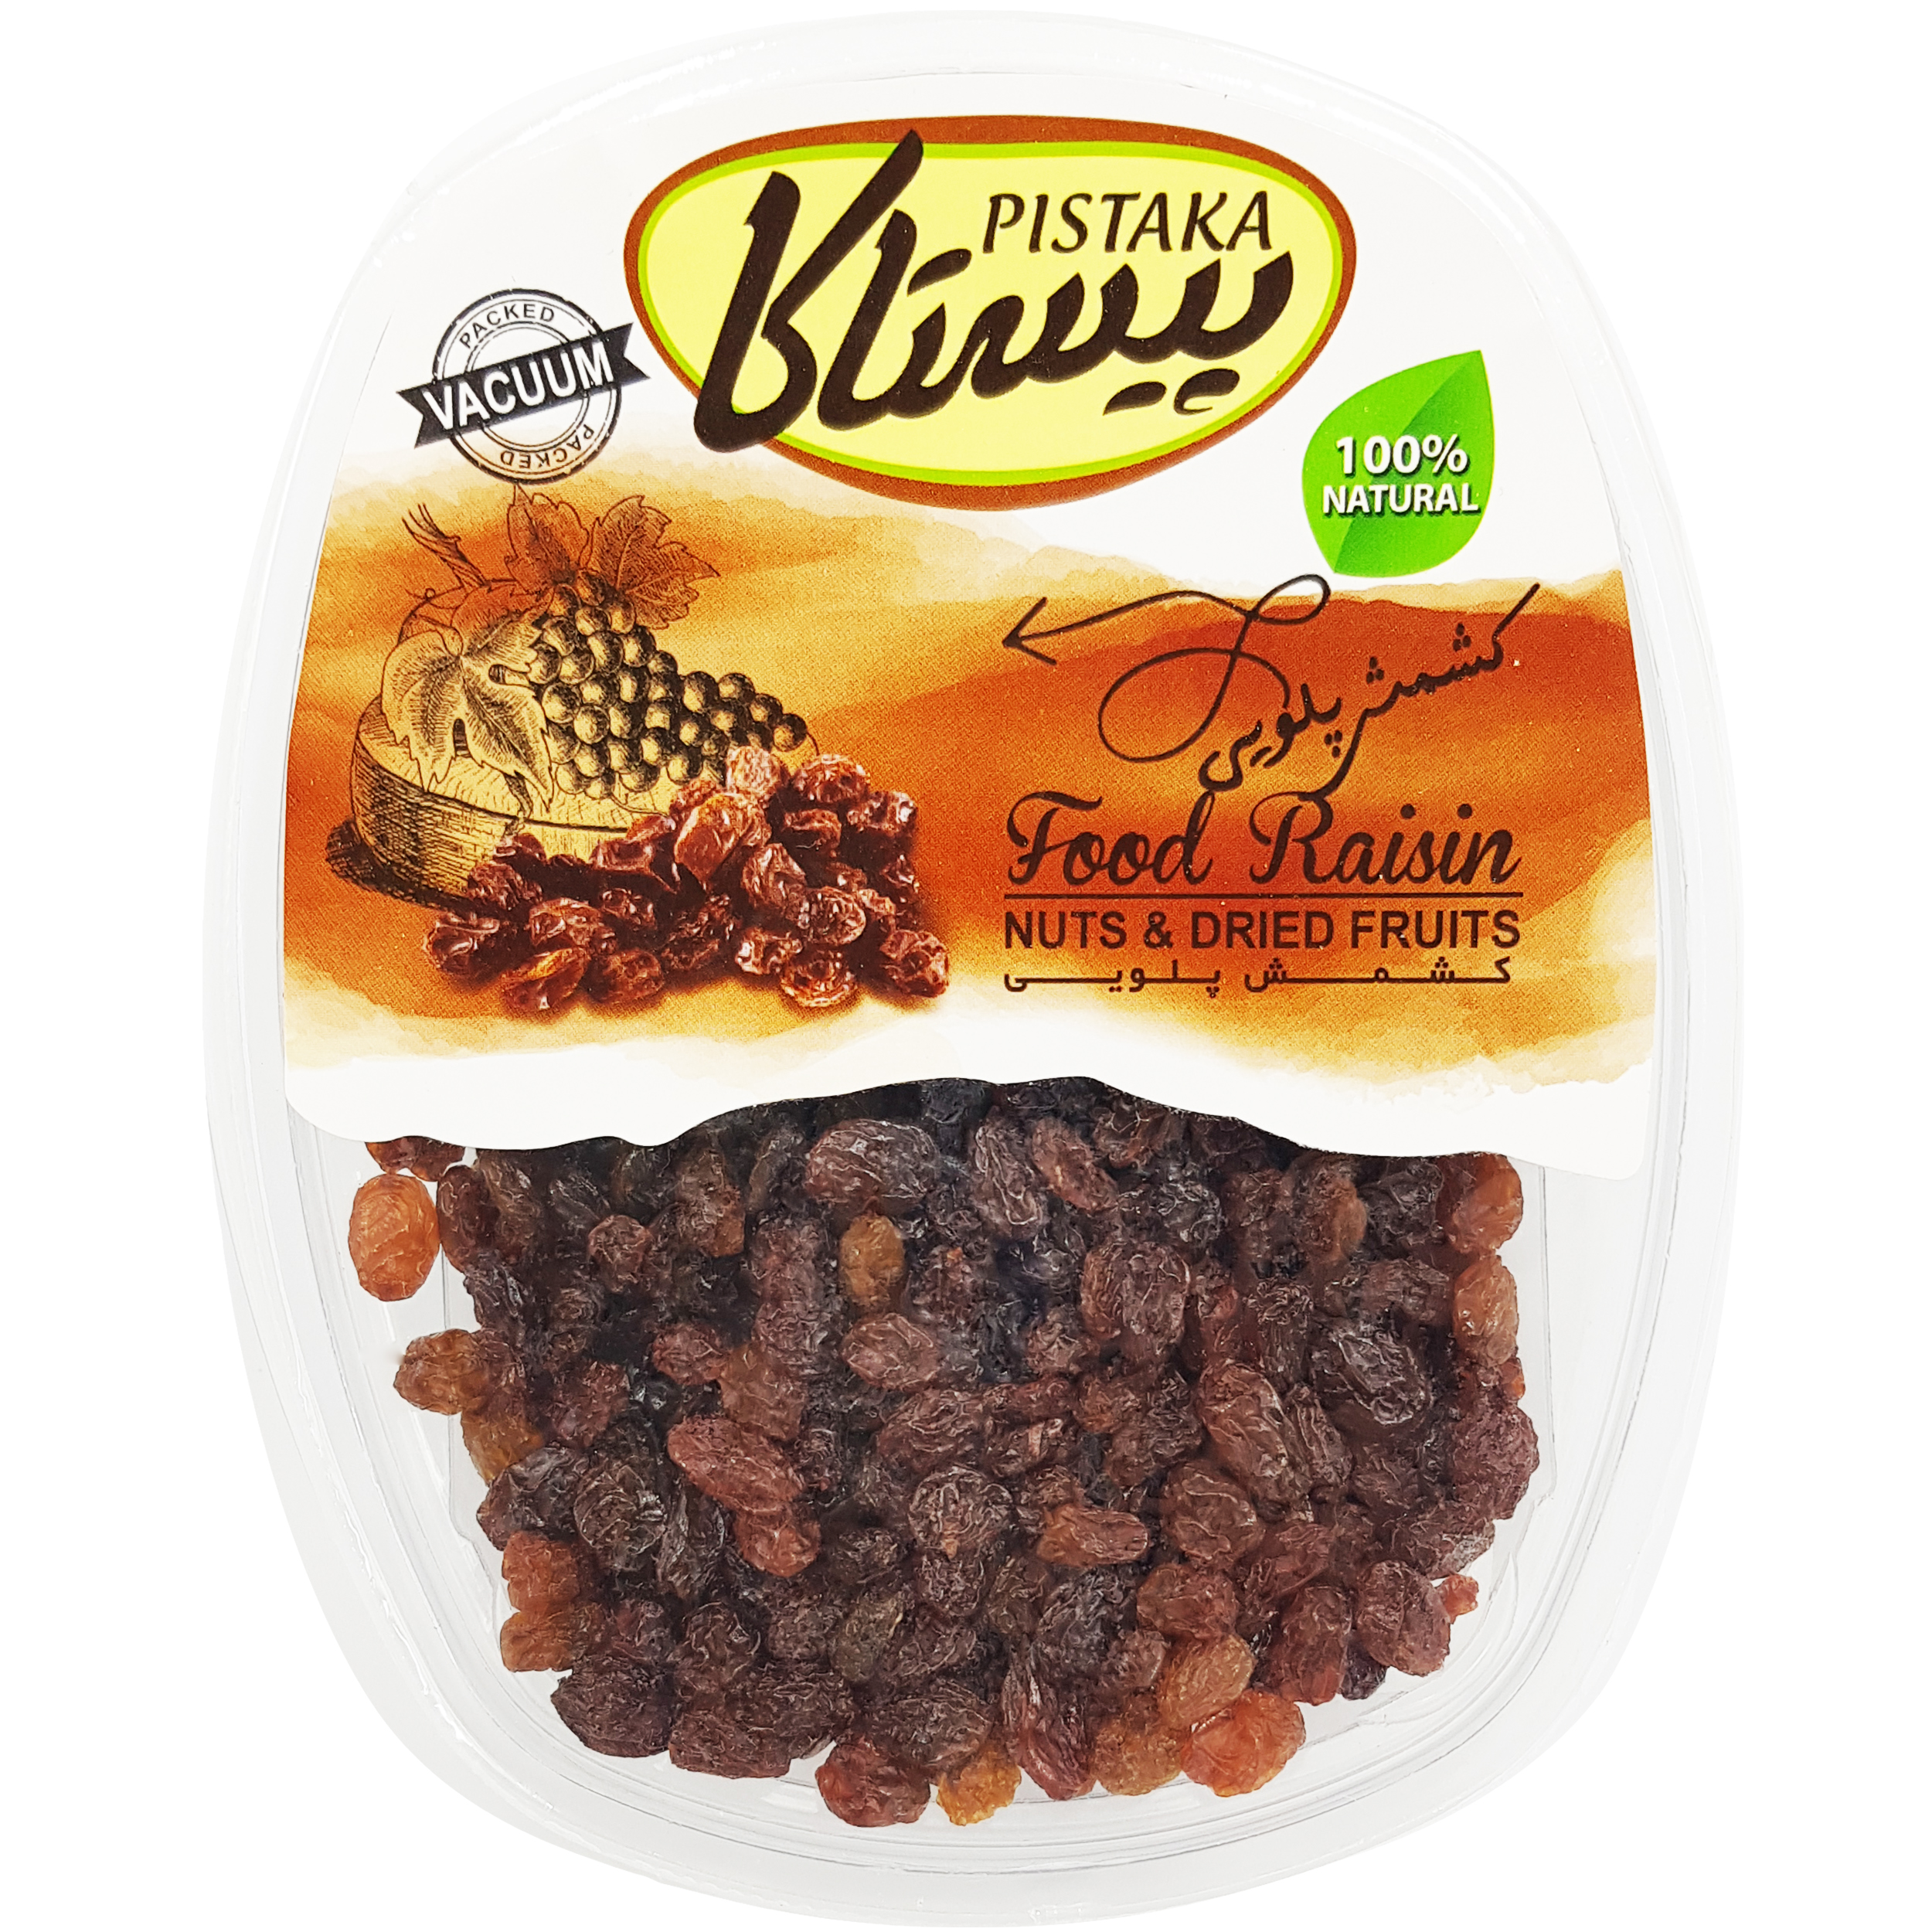 PISTAKA raisins, 300 grams